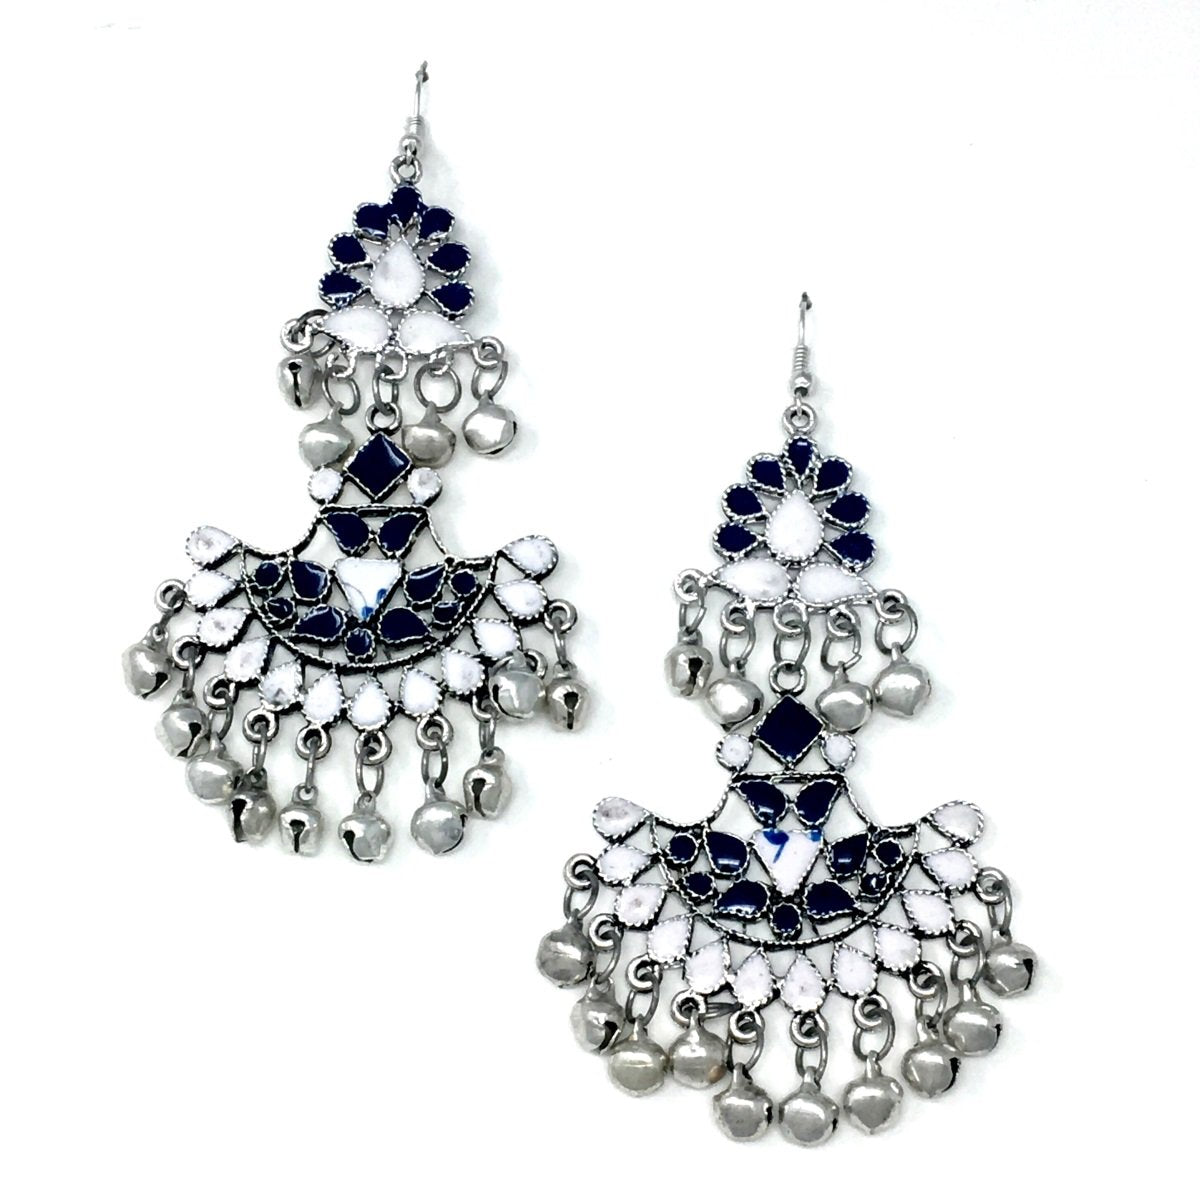 Antique Silver White and Blue Meenakari Earrings